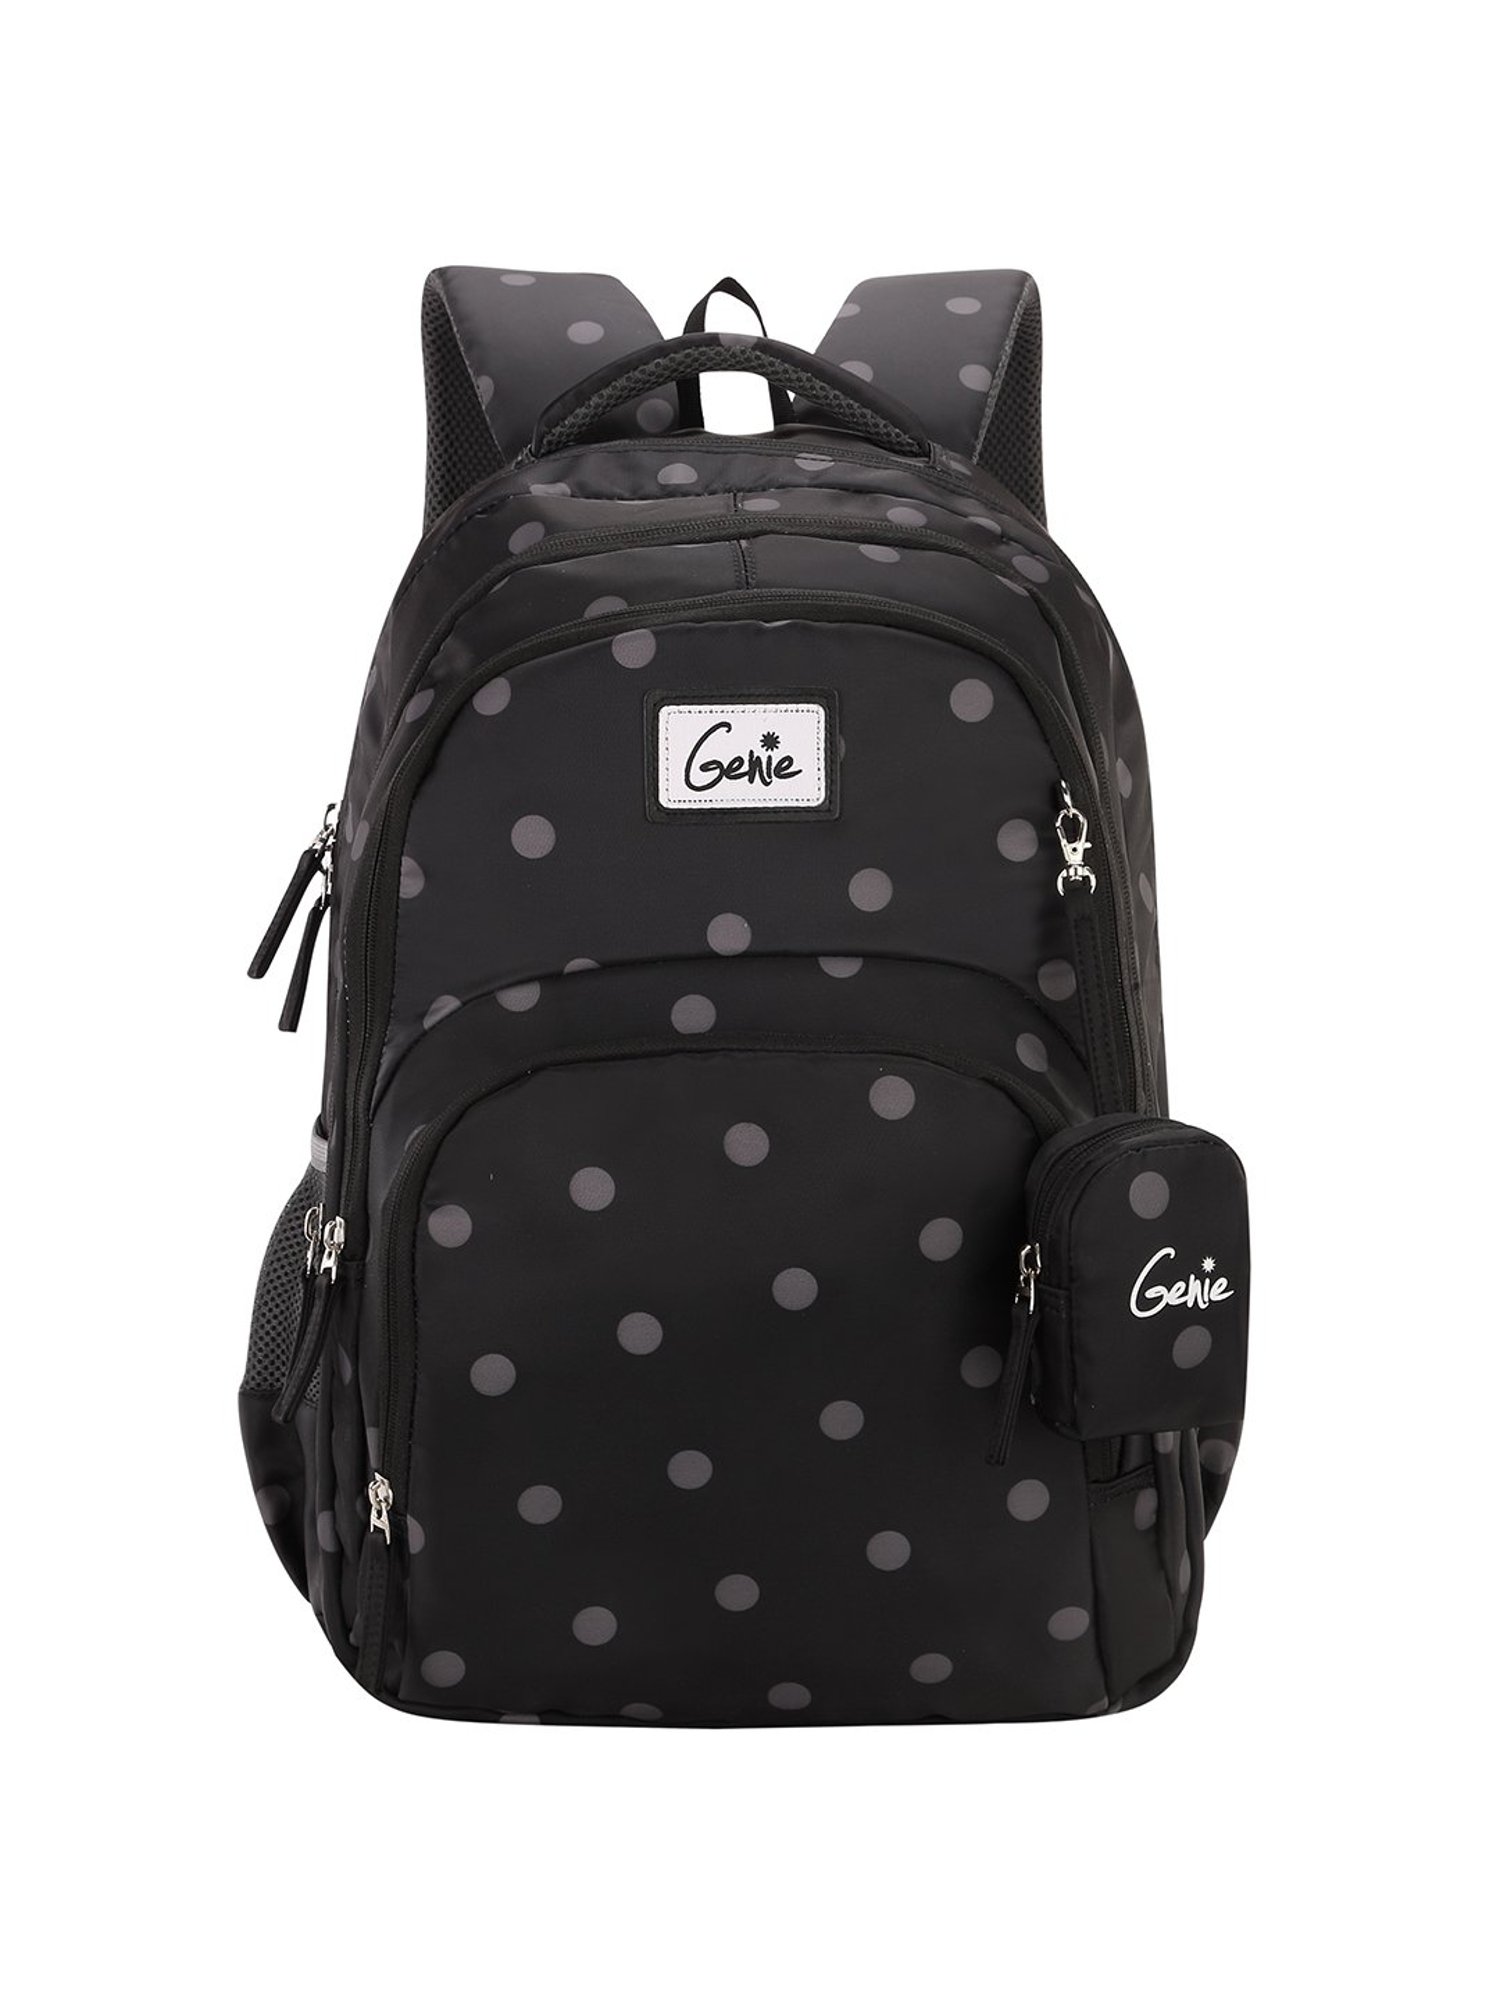 Buy Genie 36 Ltrs Black & White School Backpack Online At Best